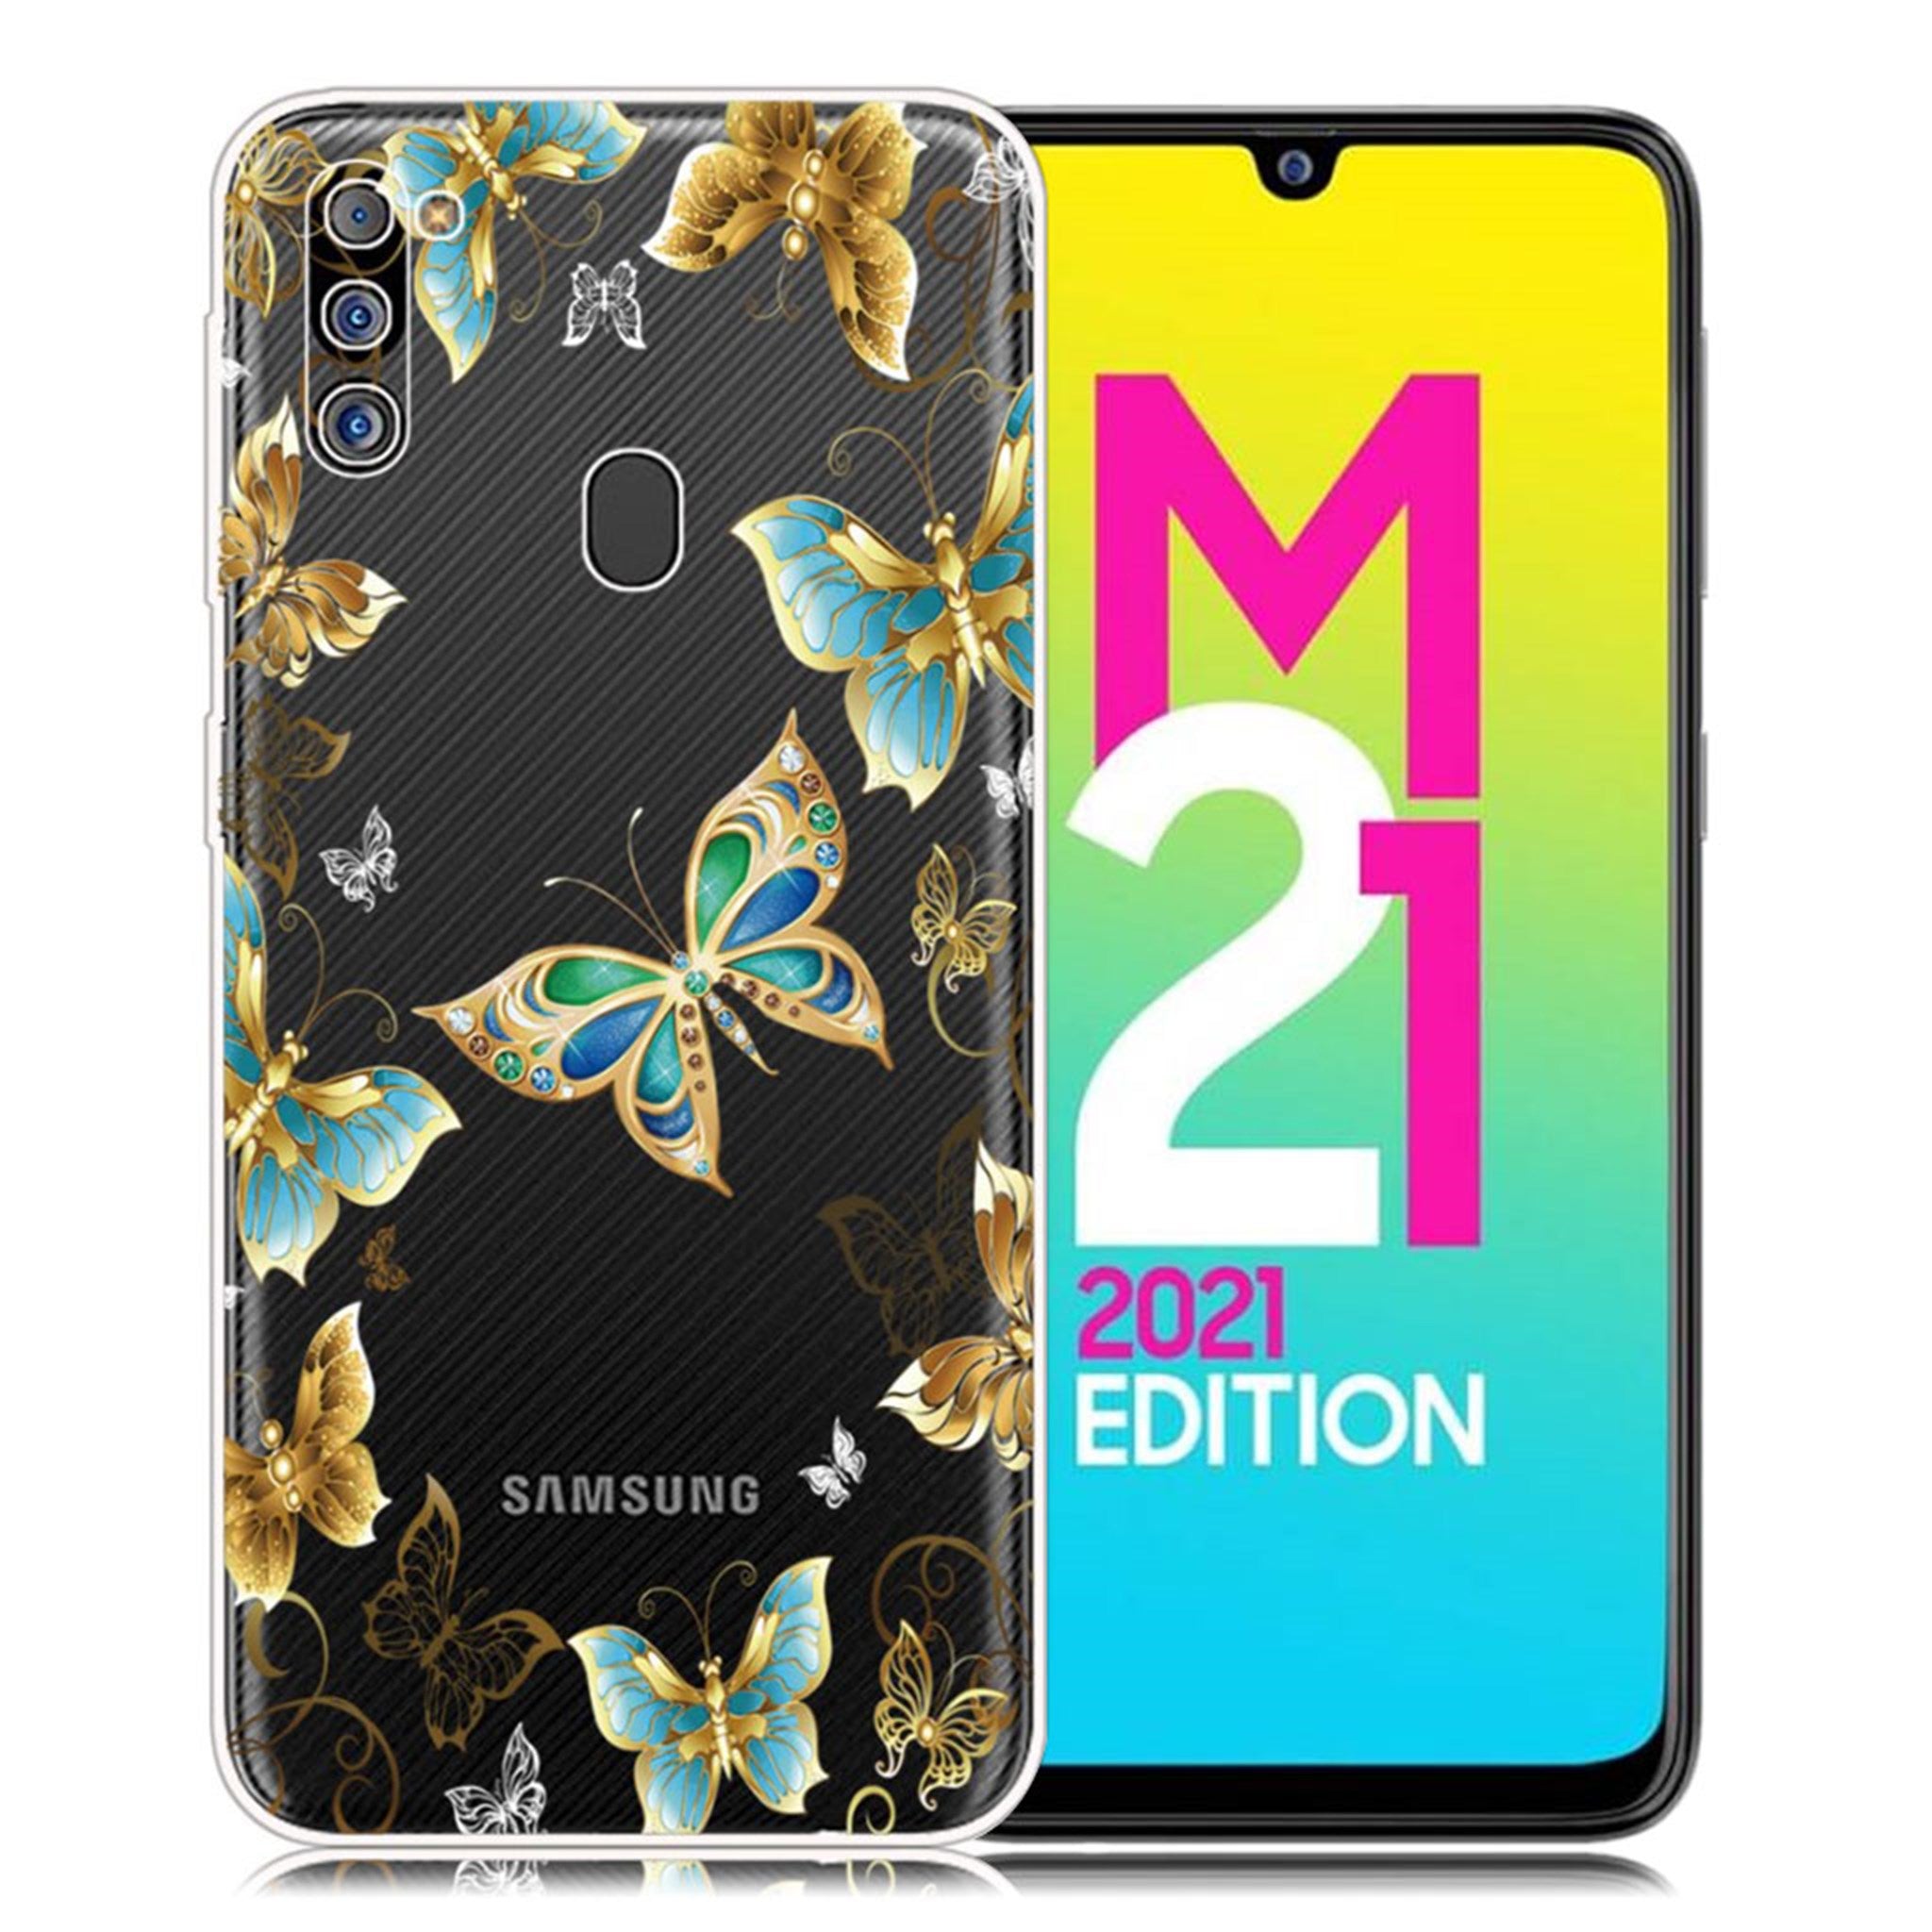 Deco Samsung Galaxy M21 2021 case - Jewelry Butterflies